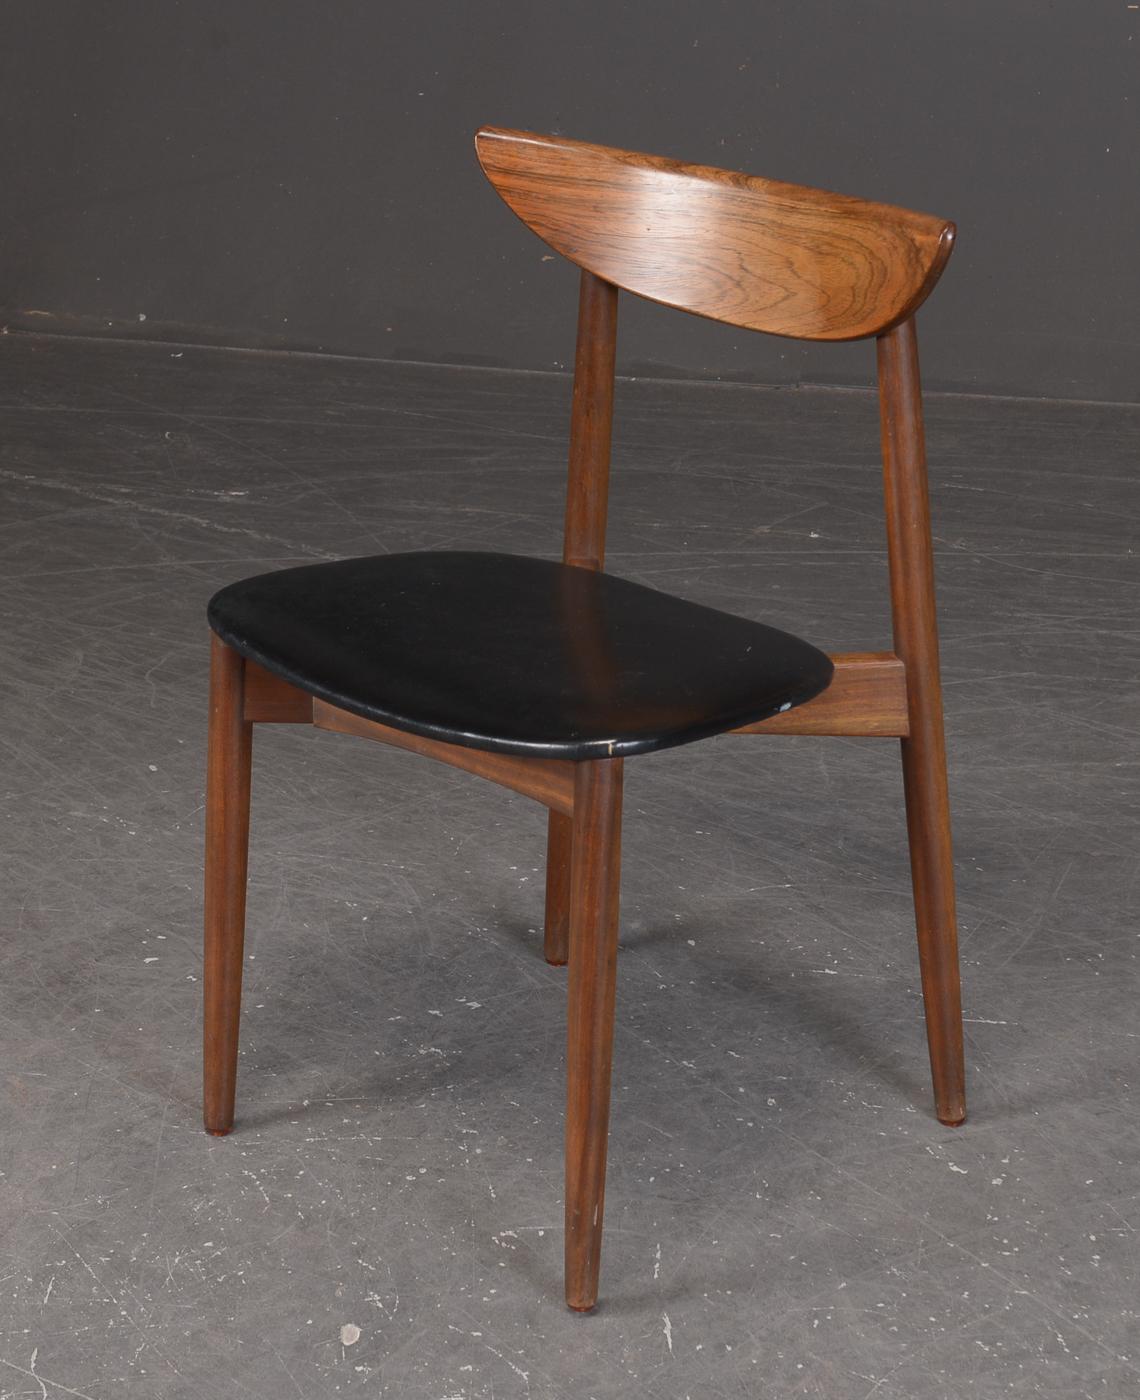 Hardwood frame with leather upholstered seat. Designed by Harry Østergaard for Skovby Møbelfabrik in the 1960s in Denmark.